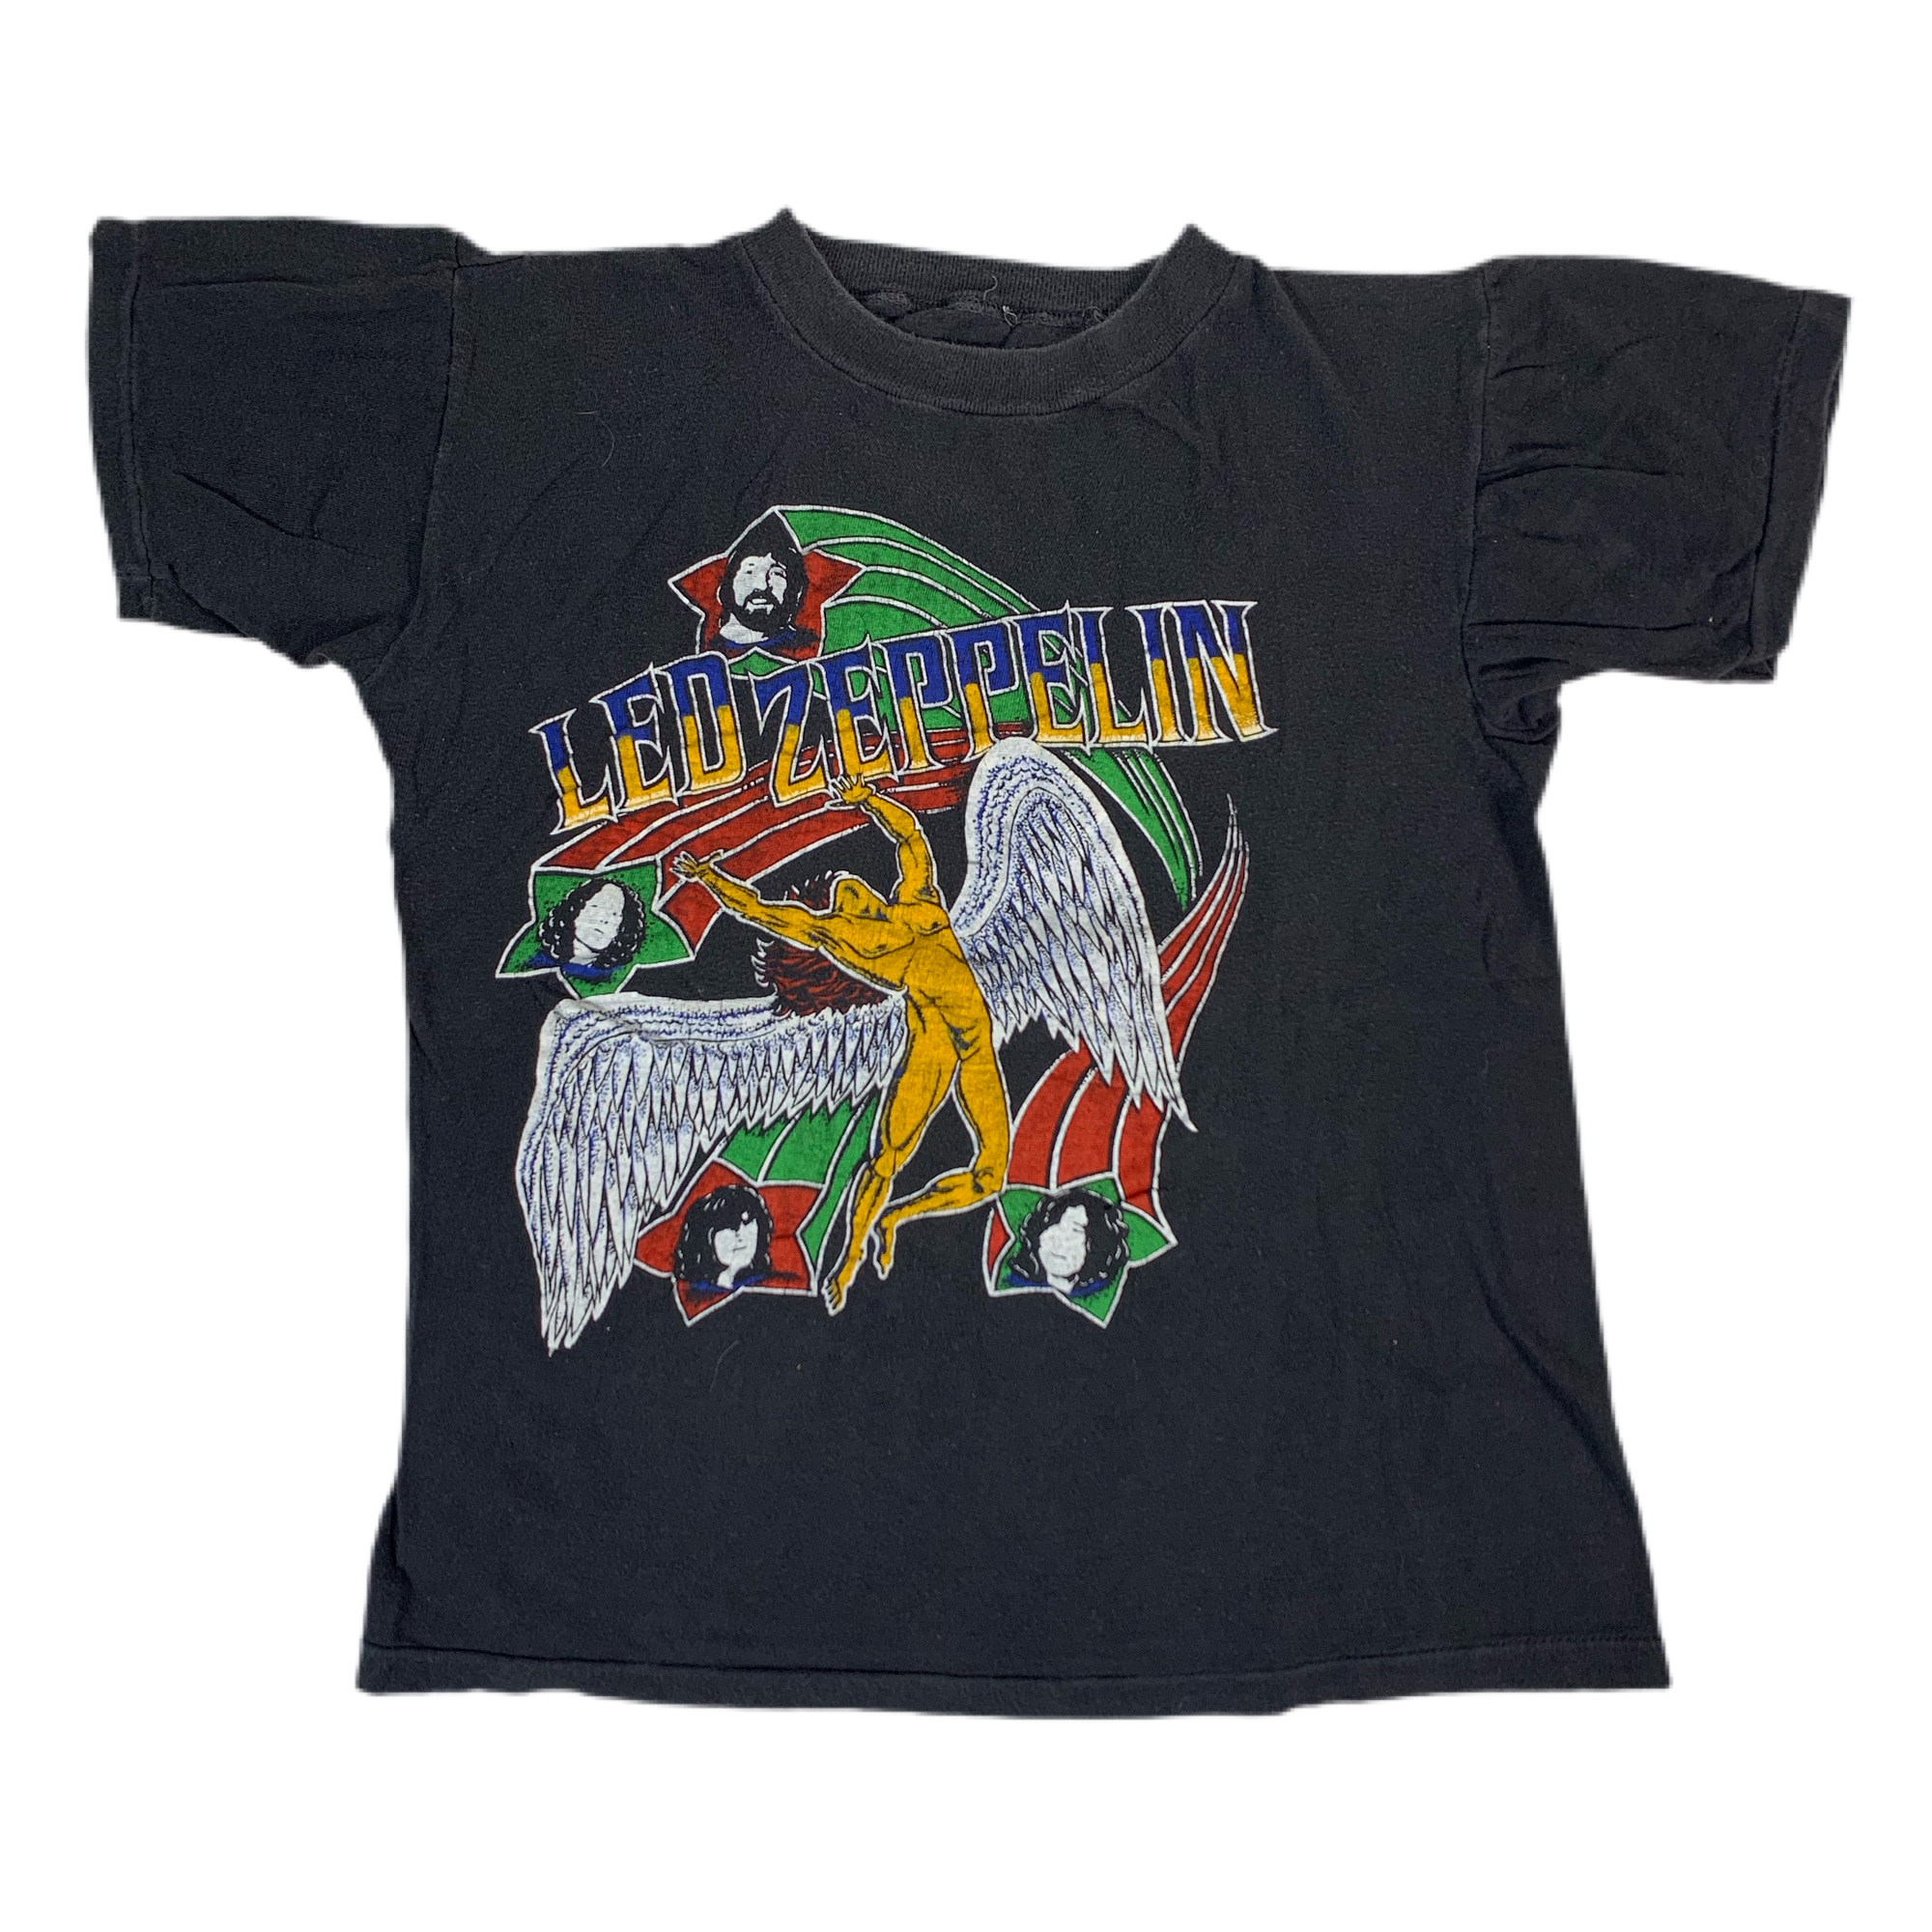 Vintage Led Zeppelin "The Battle of Evermore" T-Shirt - jointcustodydc